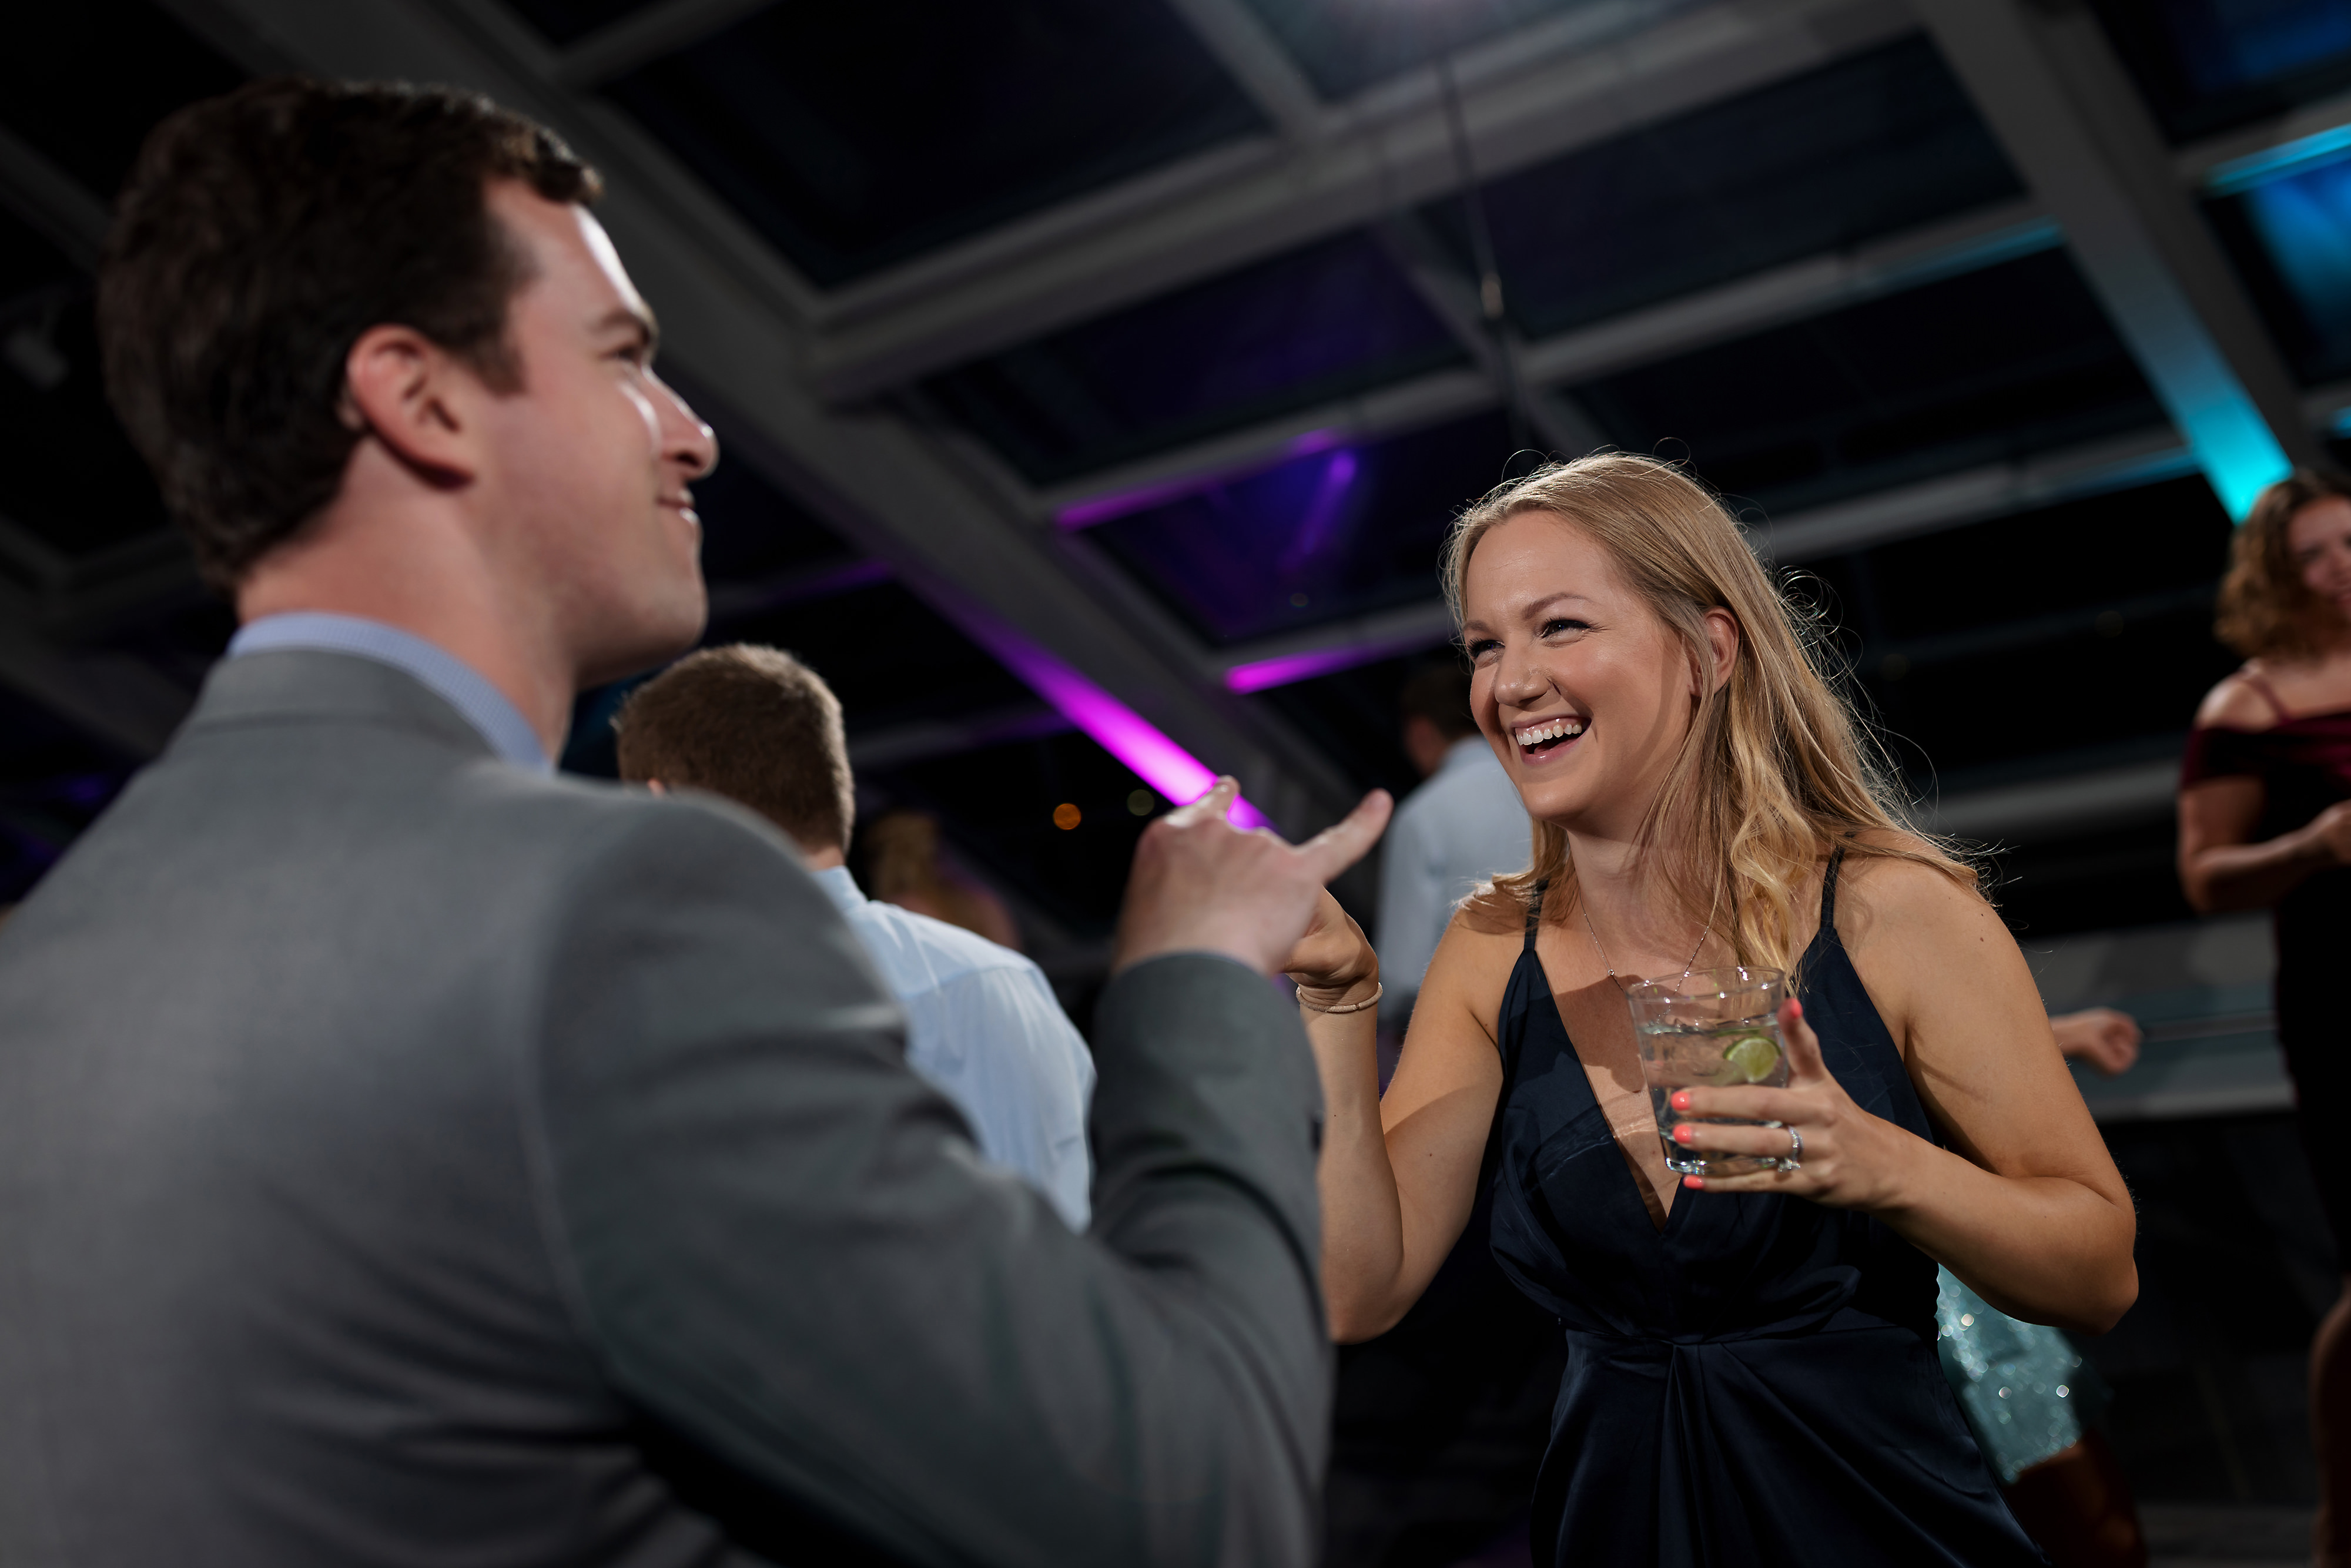 wedding guests dance during wedding reception at Adler Planetarium in Chicago